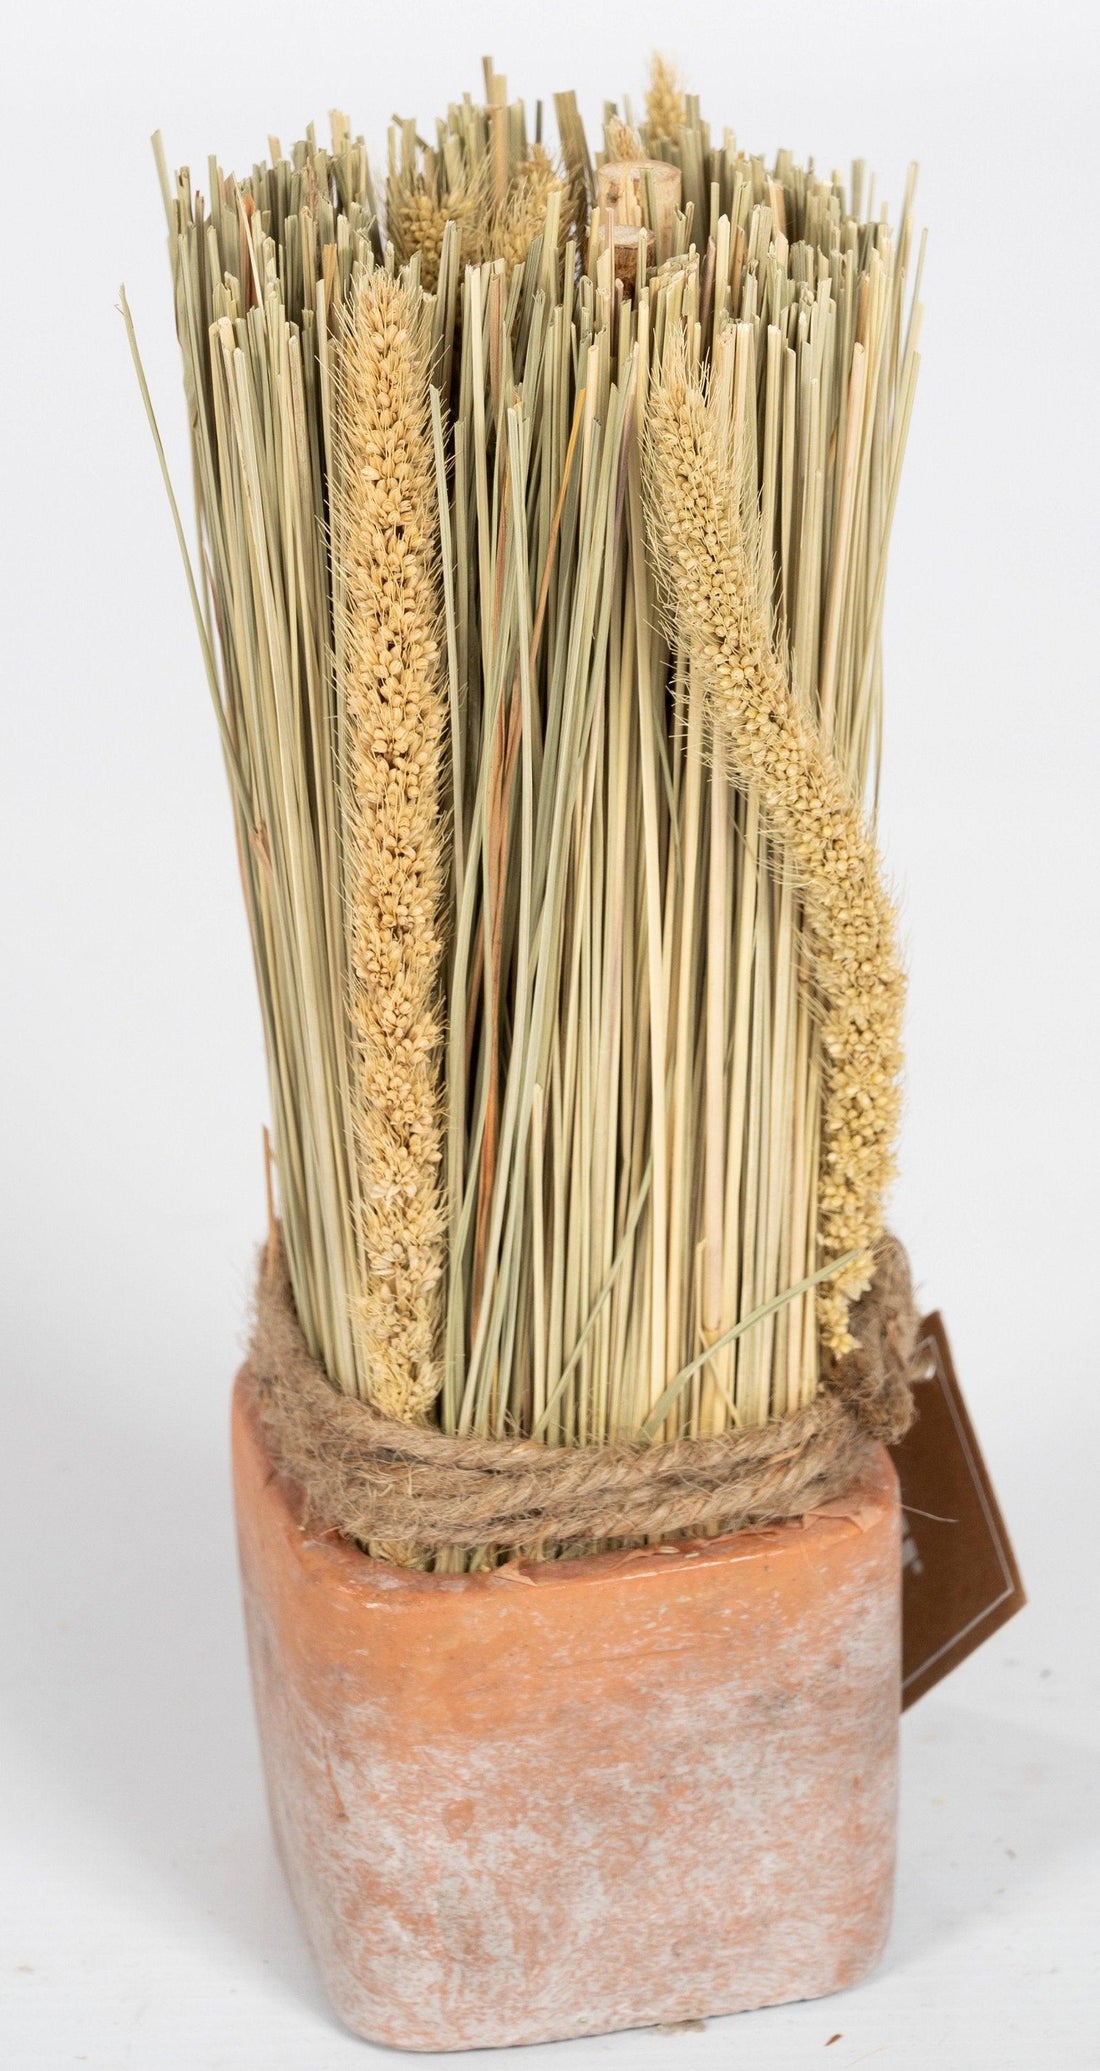 Corn Dried Grass Bouquet in Terracotta Pot - £16.99 - Flower Sprays 